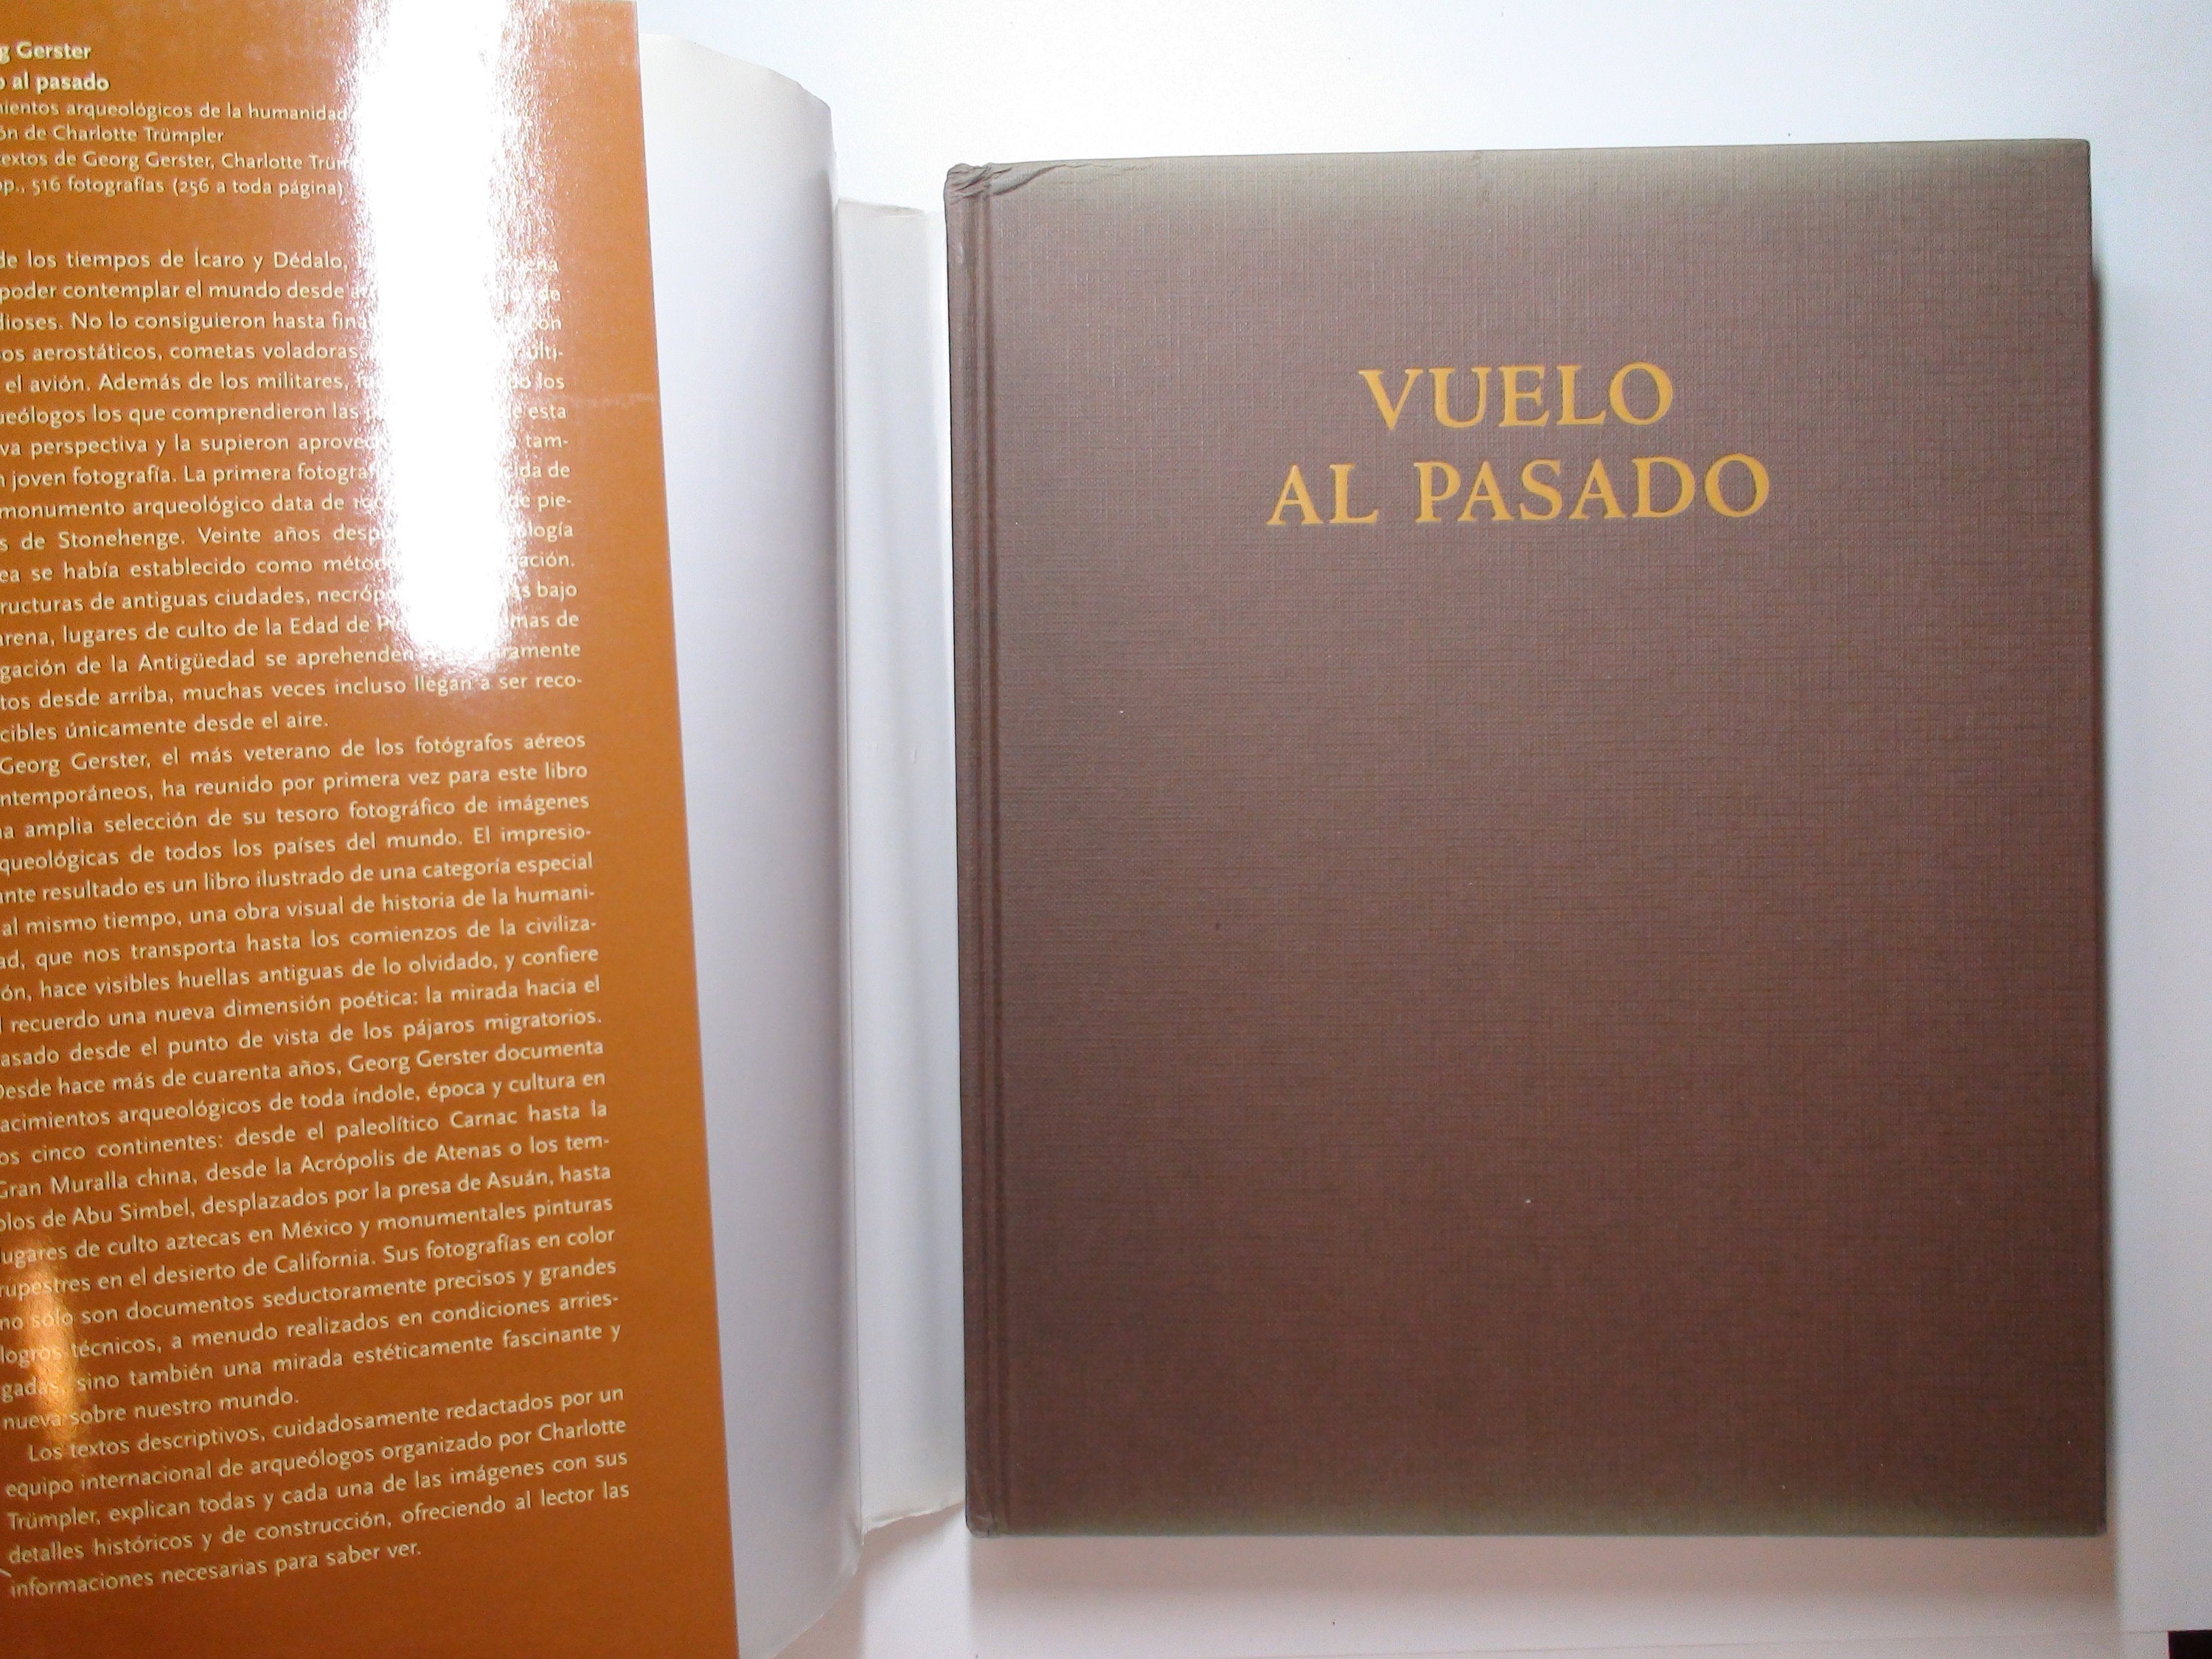 Vuelo al Pasado (Flight to the Past), Spanish Language, Archaeology Book